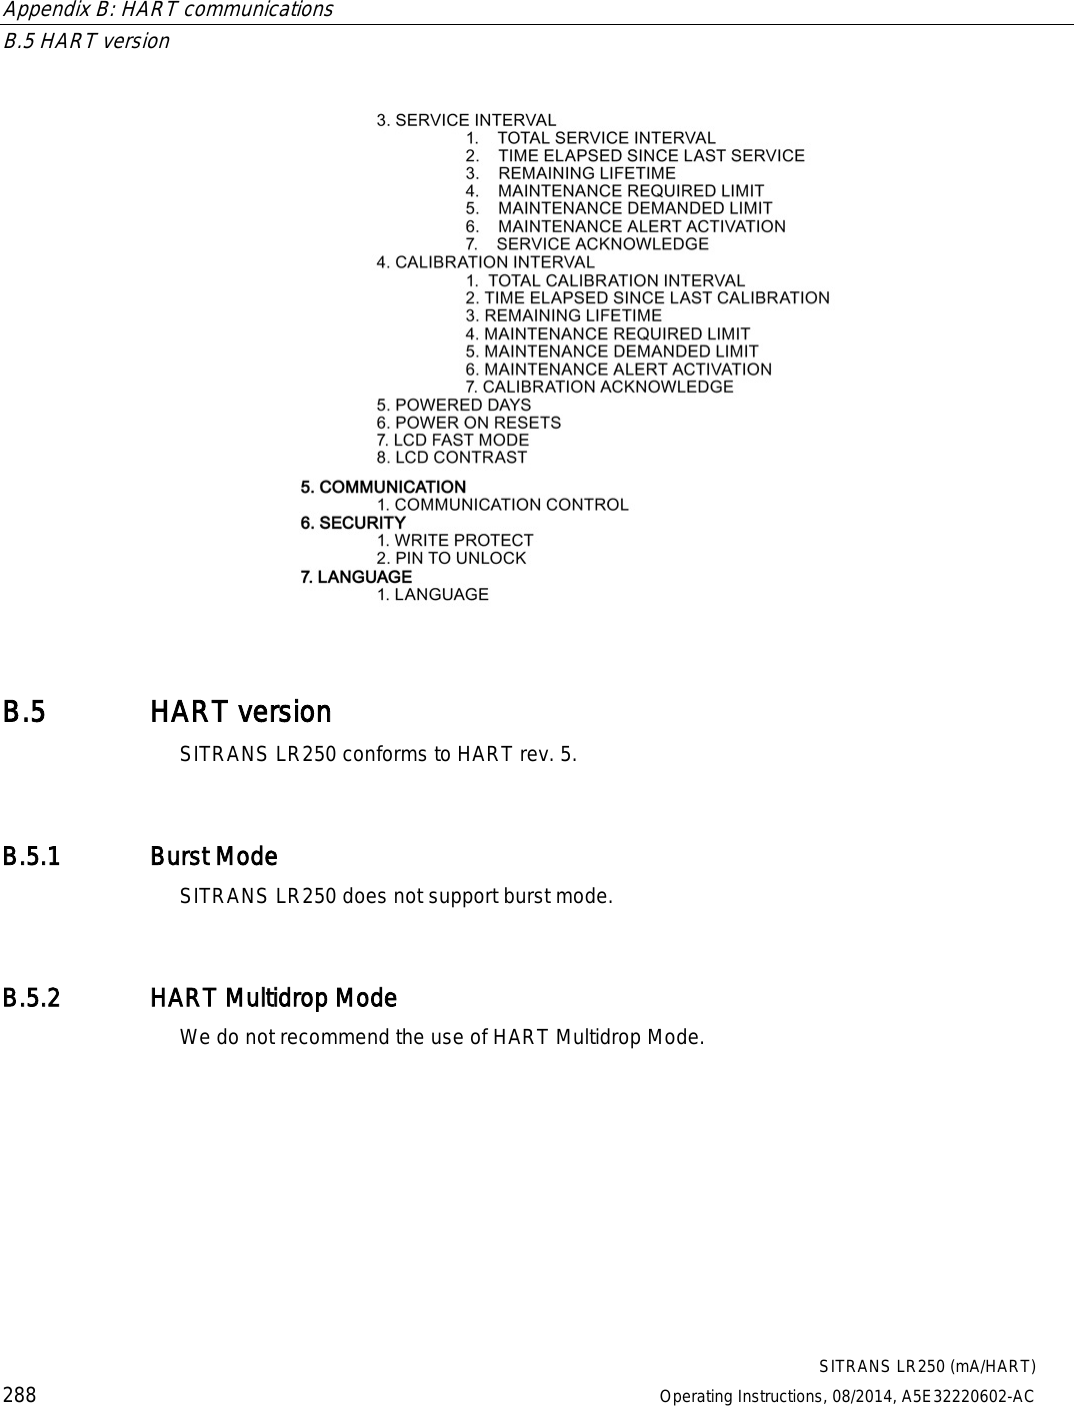 Appendix B: HART communications   B.5 HART version  SITRANS LR250 (mA/HART) 288 Operating Instructions, 08/2014, A5E32220602-AC  B.5 HART version SITRANS LR250 conforms to HART rev. 5. B.5.1 Burst Mode SITRANS LR250 does not support burst mode. B.5.2 HART Multidrop Mode We do not recommend the use of HART Multidrop Mode. 